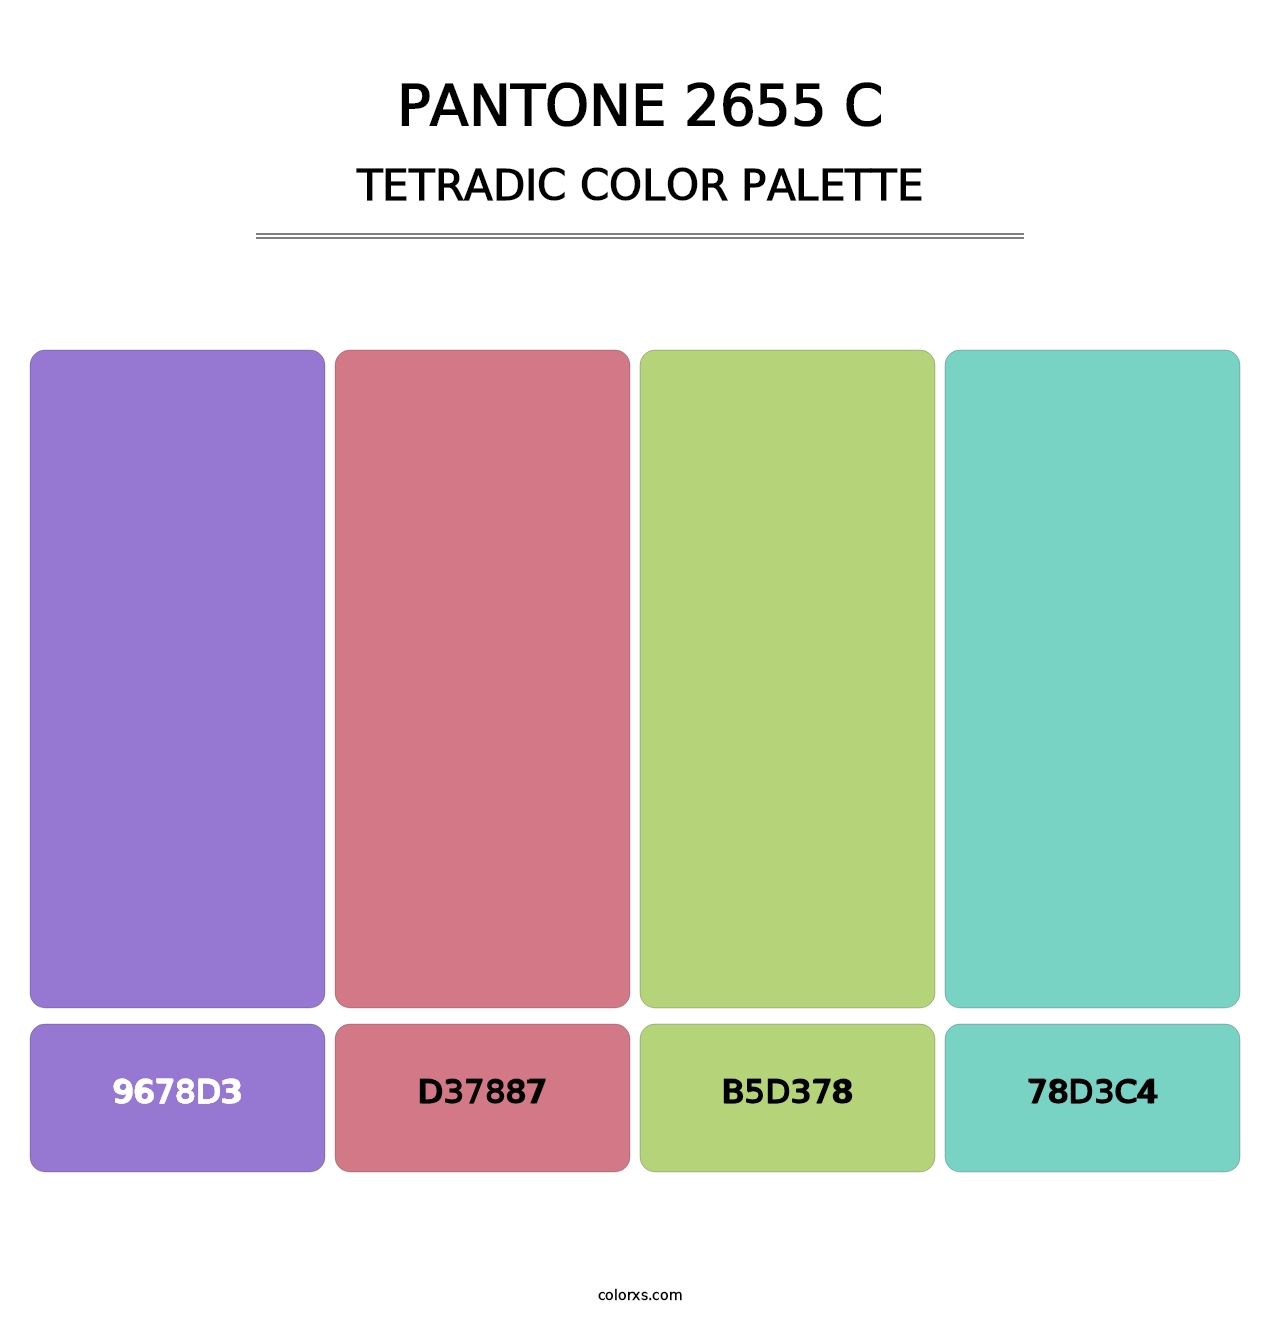 PANTONE 2655 C - Tetradic Color Palette